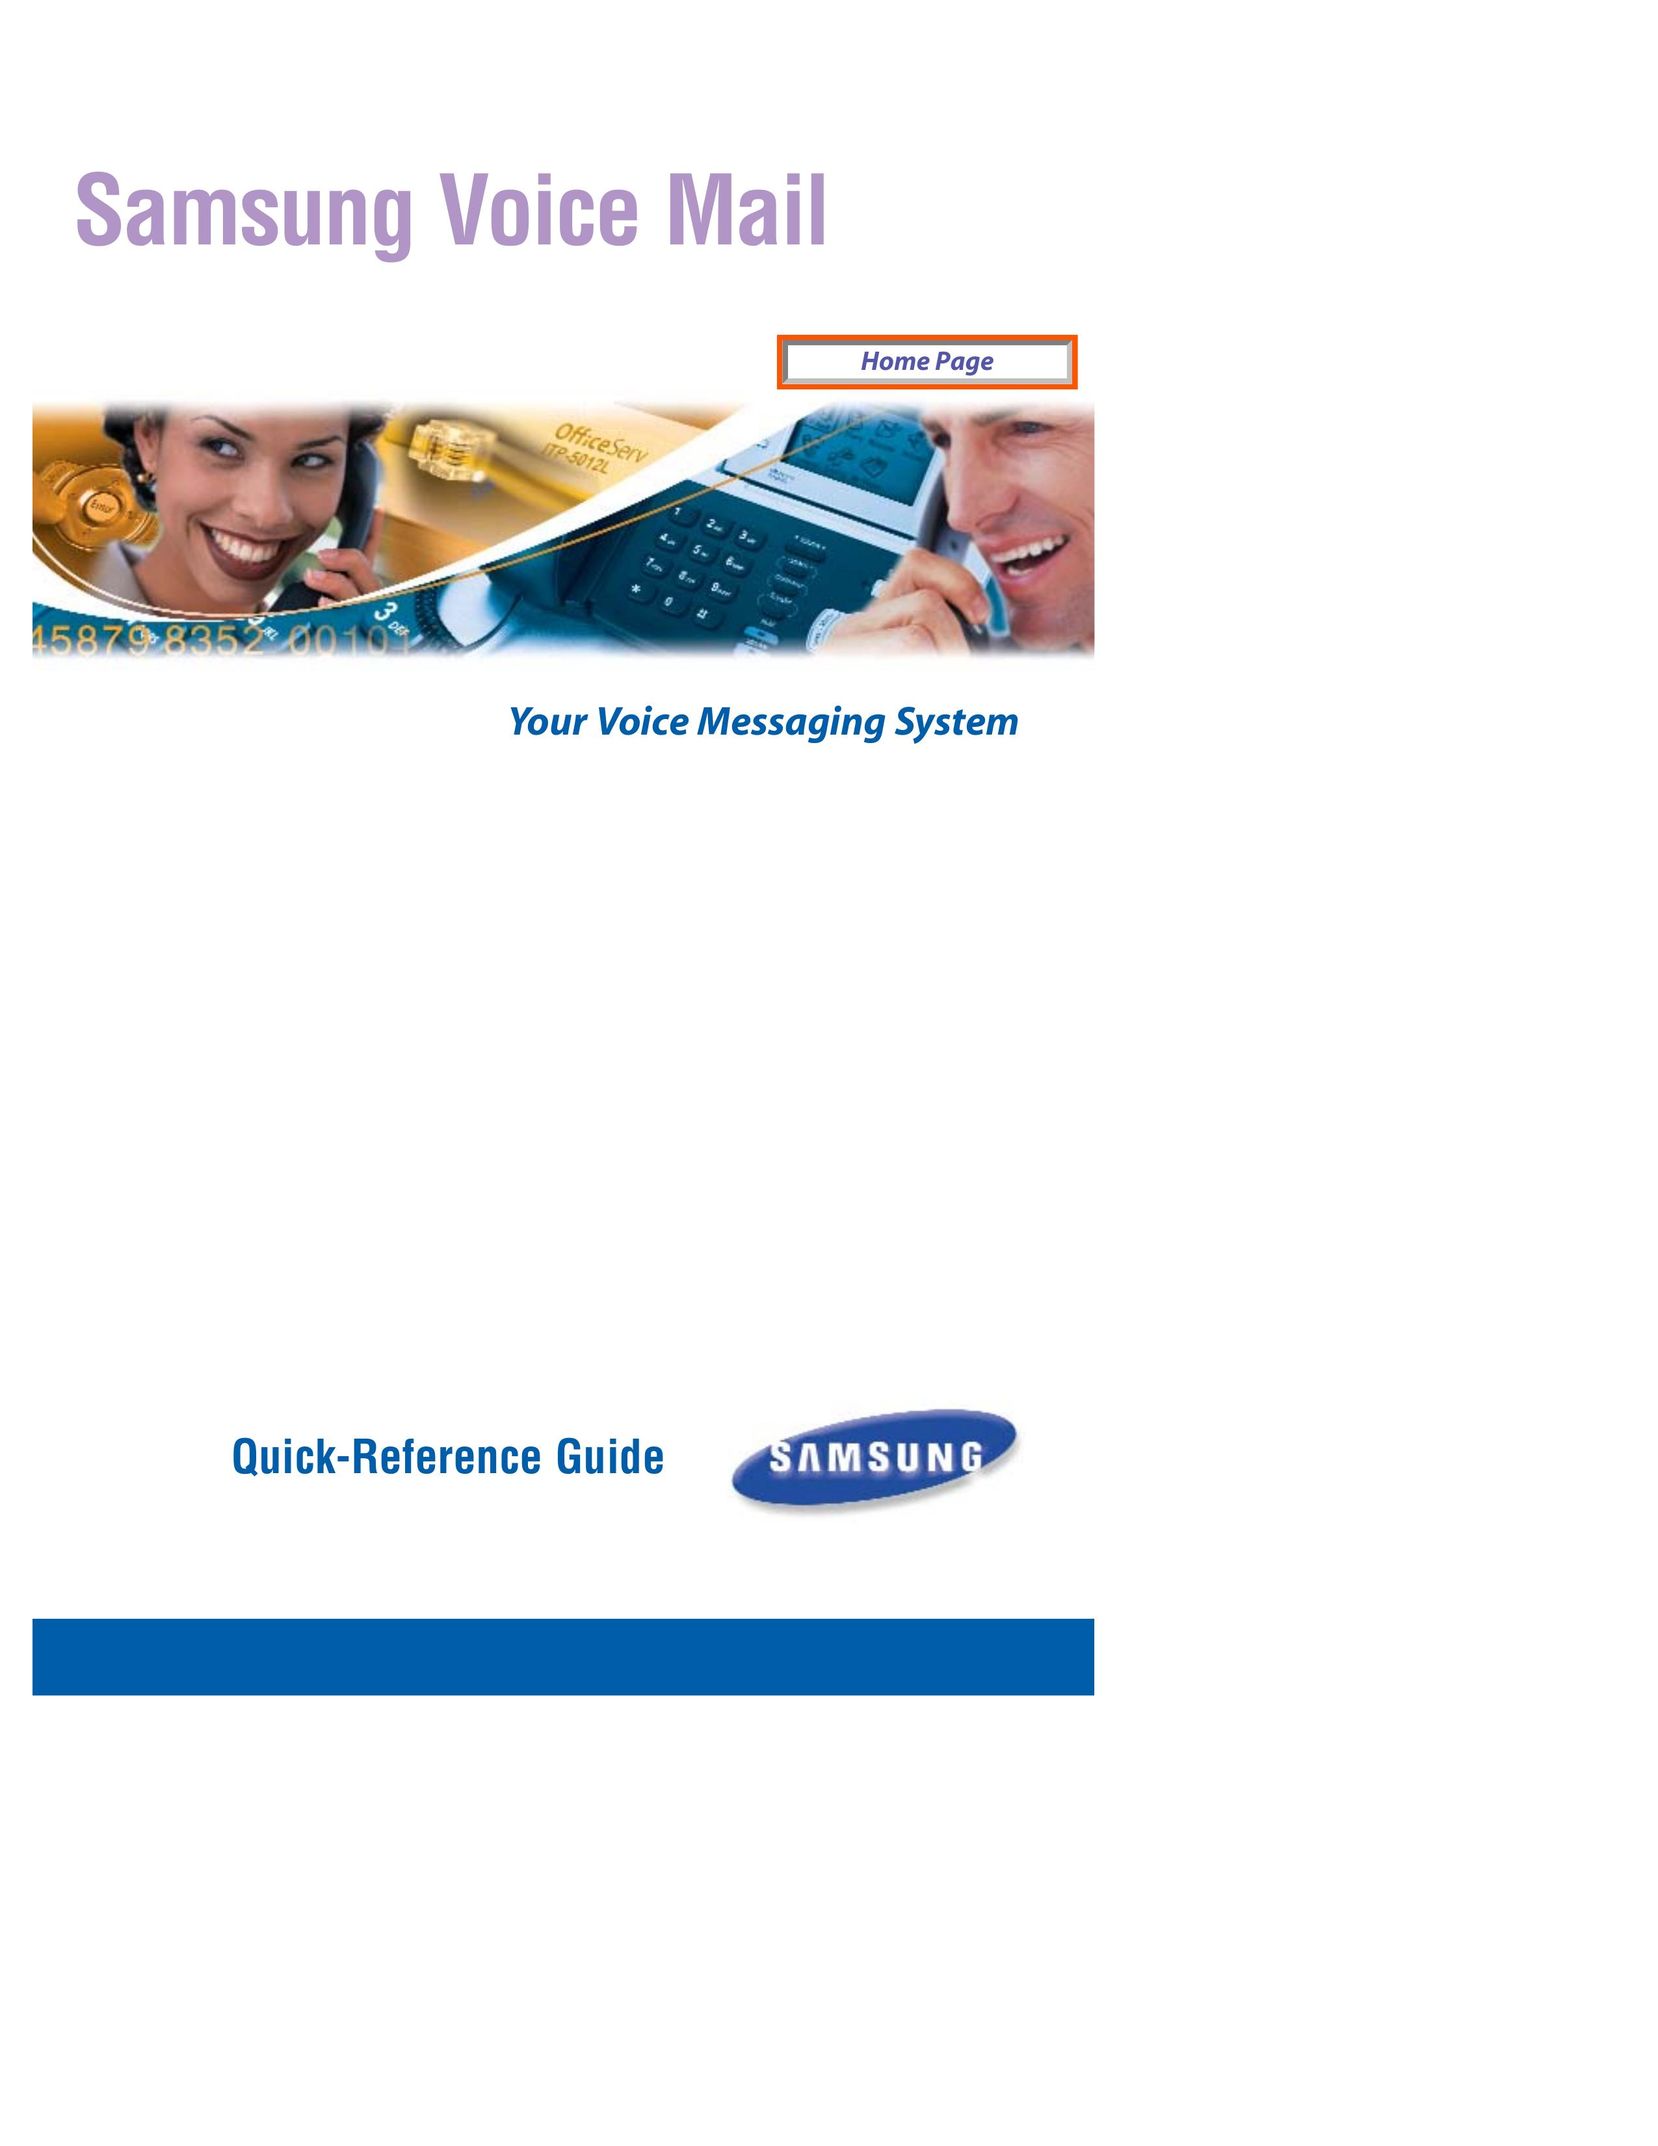 Samsung SVMi-16E Answering Machine User Manual